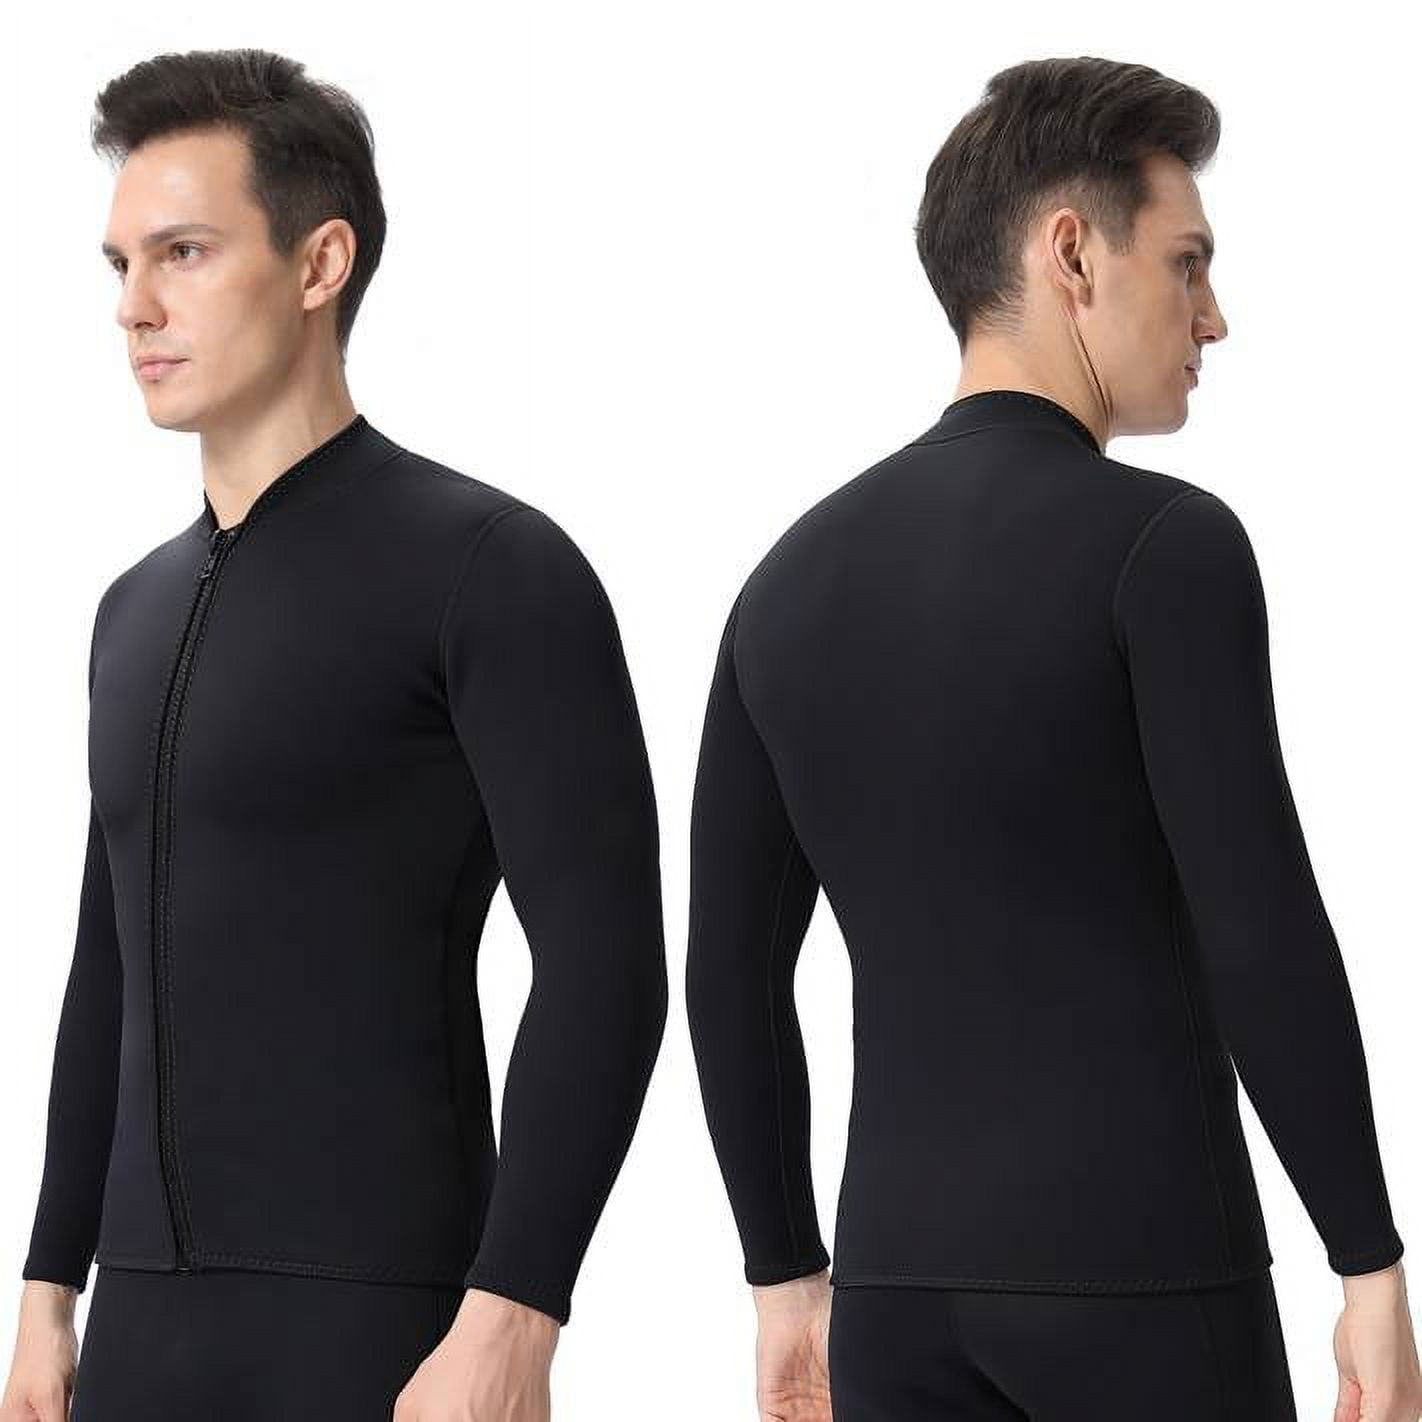 REALON Wetsuit Jacket Men Wet Suit Top 2mm Neoprene Long Sleeve Shirt  Swimsuit for Diving Swimming Surfing Diving 